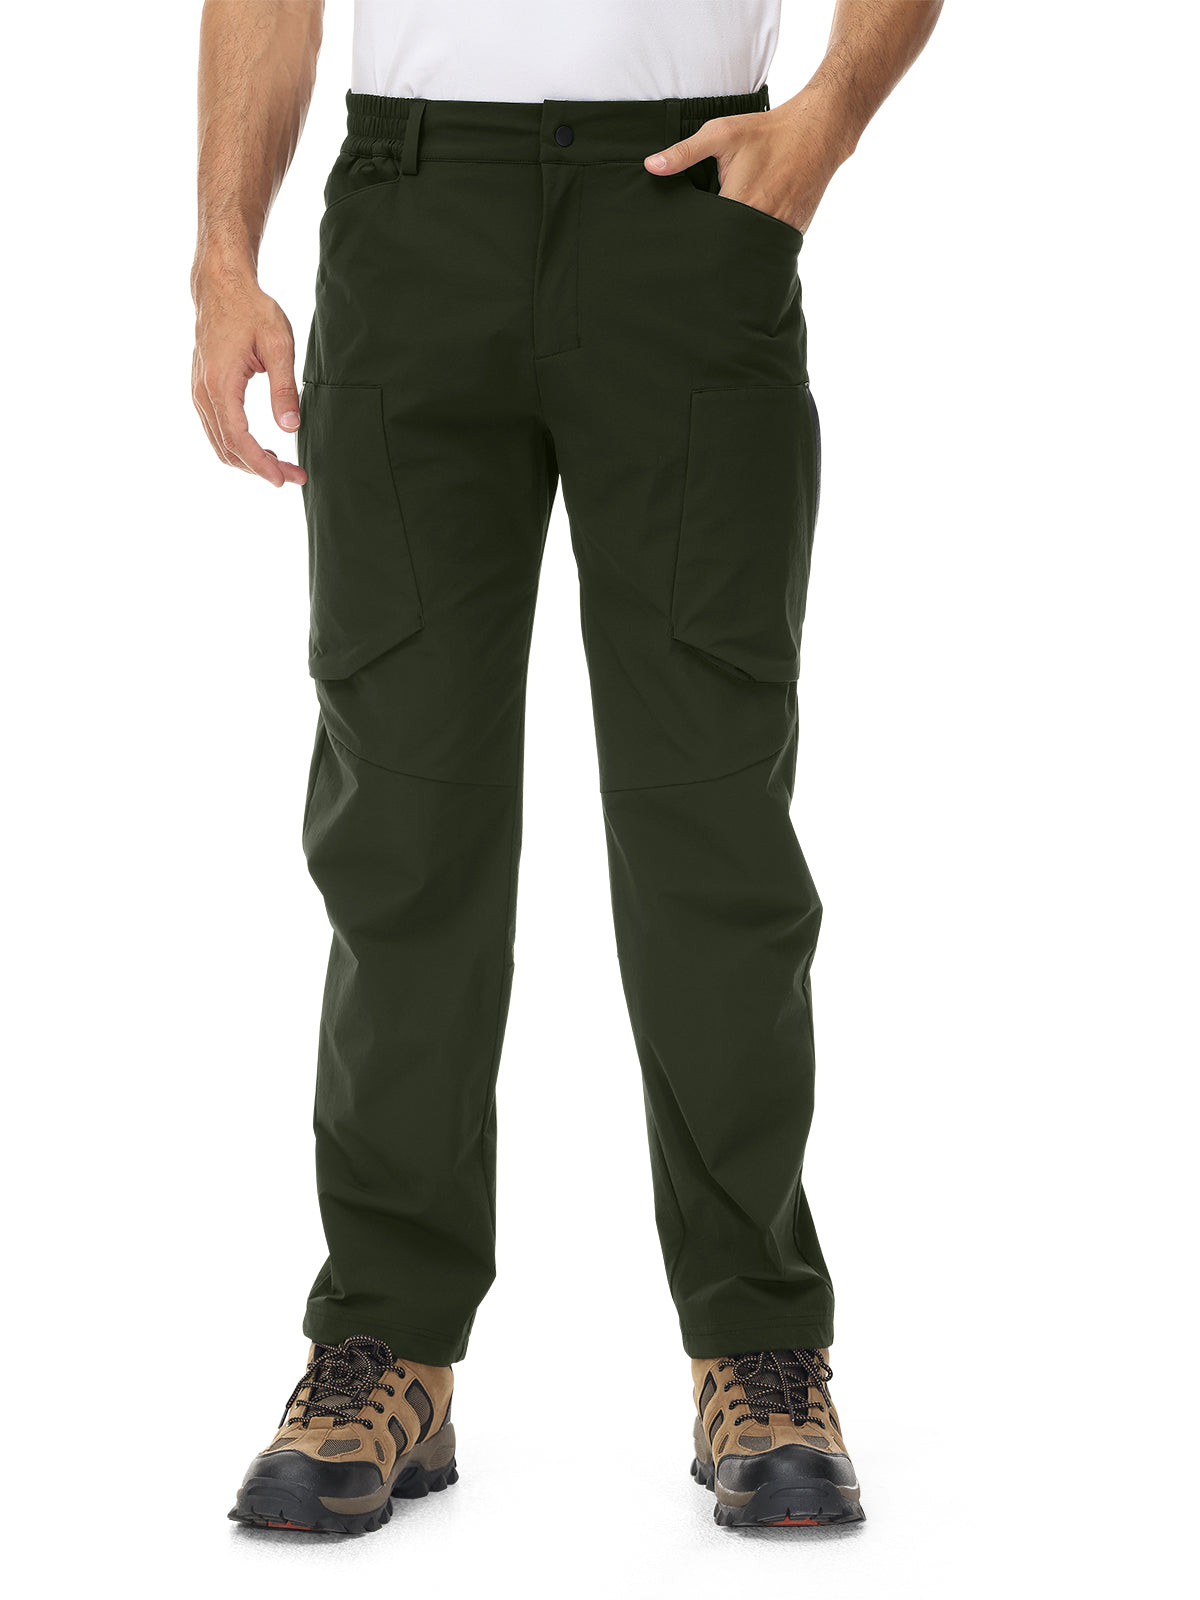 Premium Comfort Dark Green Pants